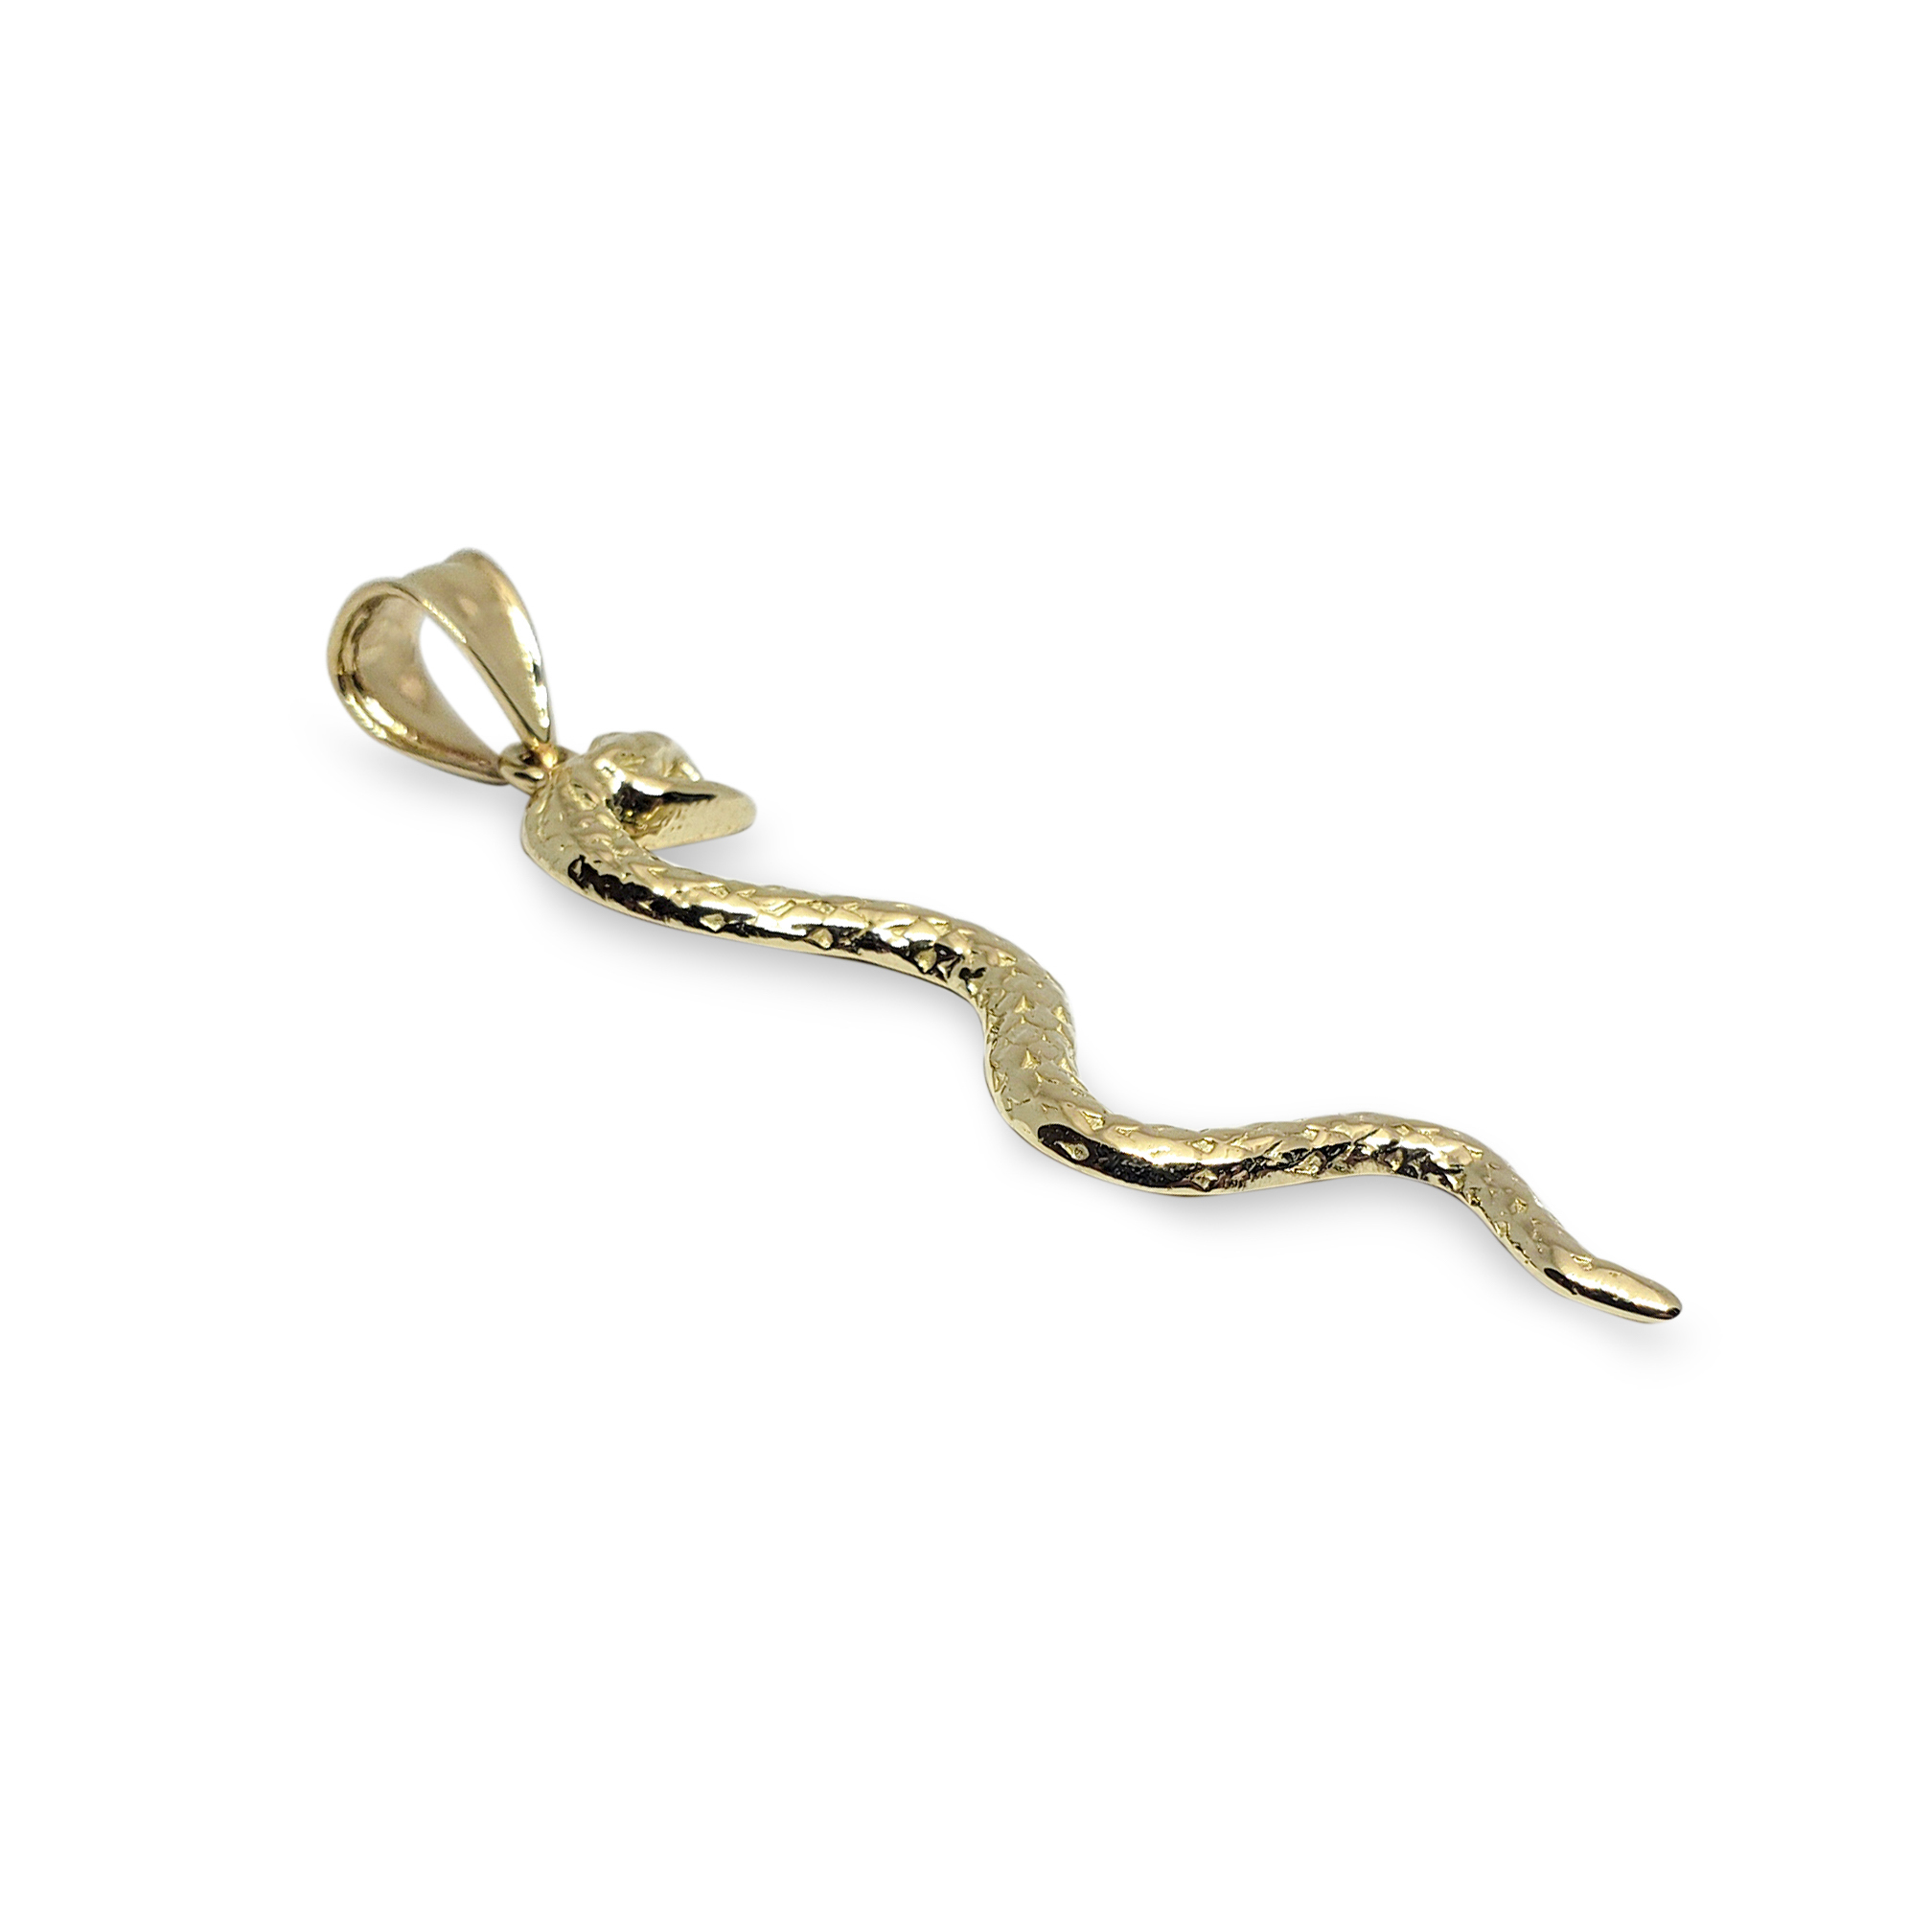 Solid 18K Yellow White or Rose Gold Fish Hook Pendant, 1 1/16 Long, 1.7  Grams, Hawaiian 